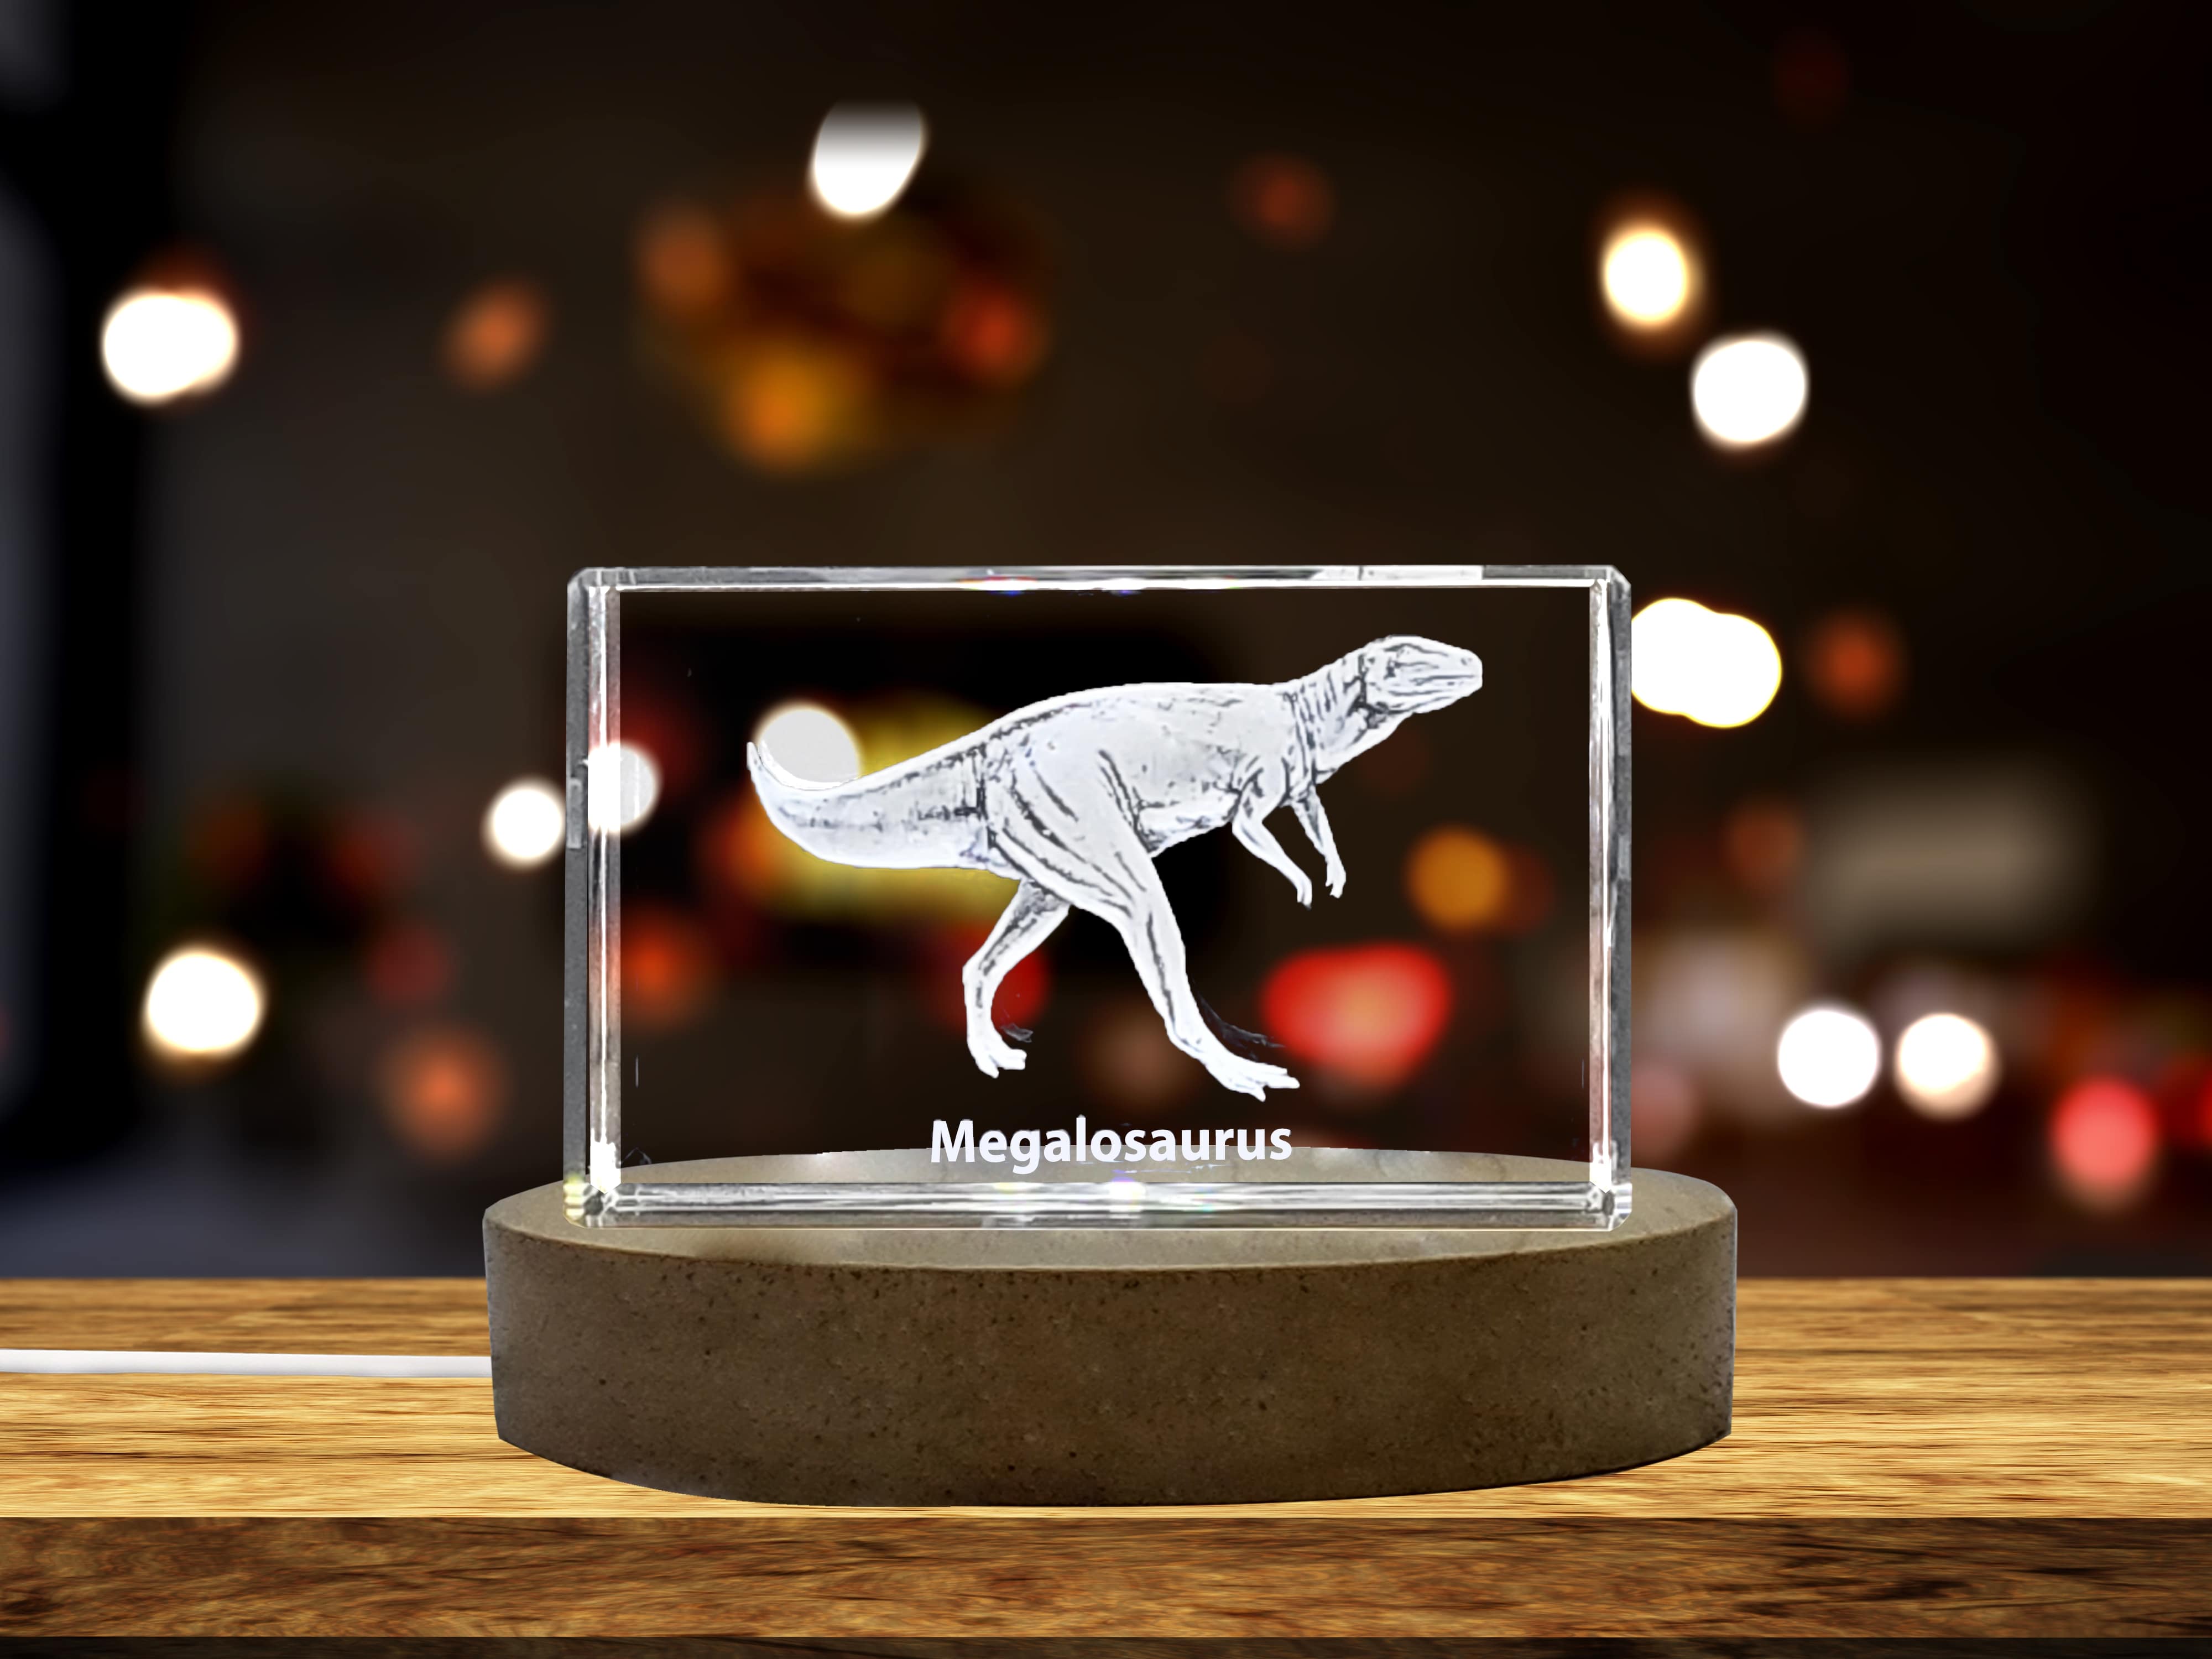 Megalosaurus Dinosaur 3D Engraved Crystal 3D Engraved Crystal Keepsake/Gift/Decor/Collectible/Souvenir A&B Crystal Collection